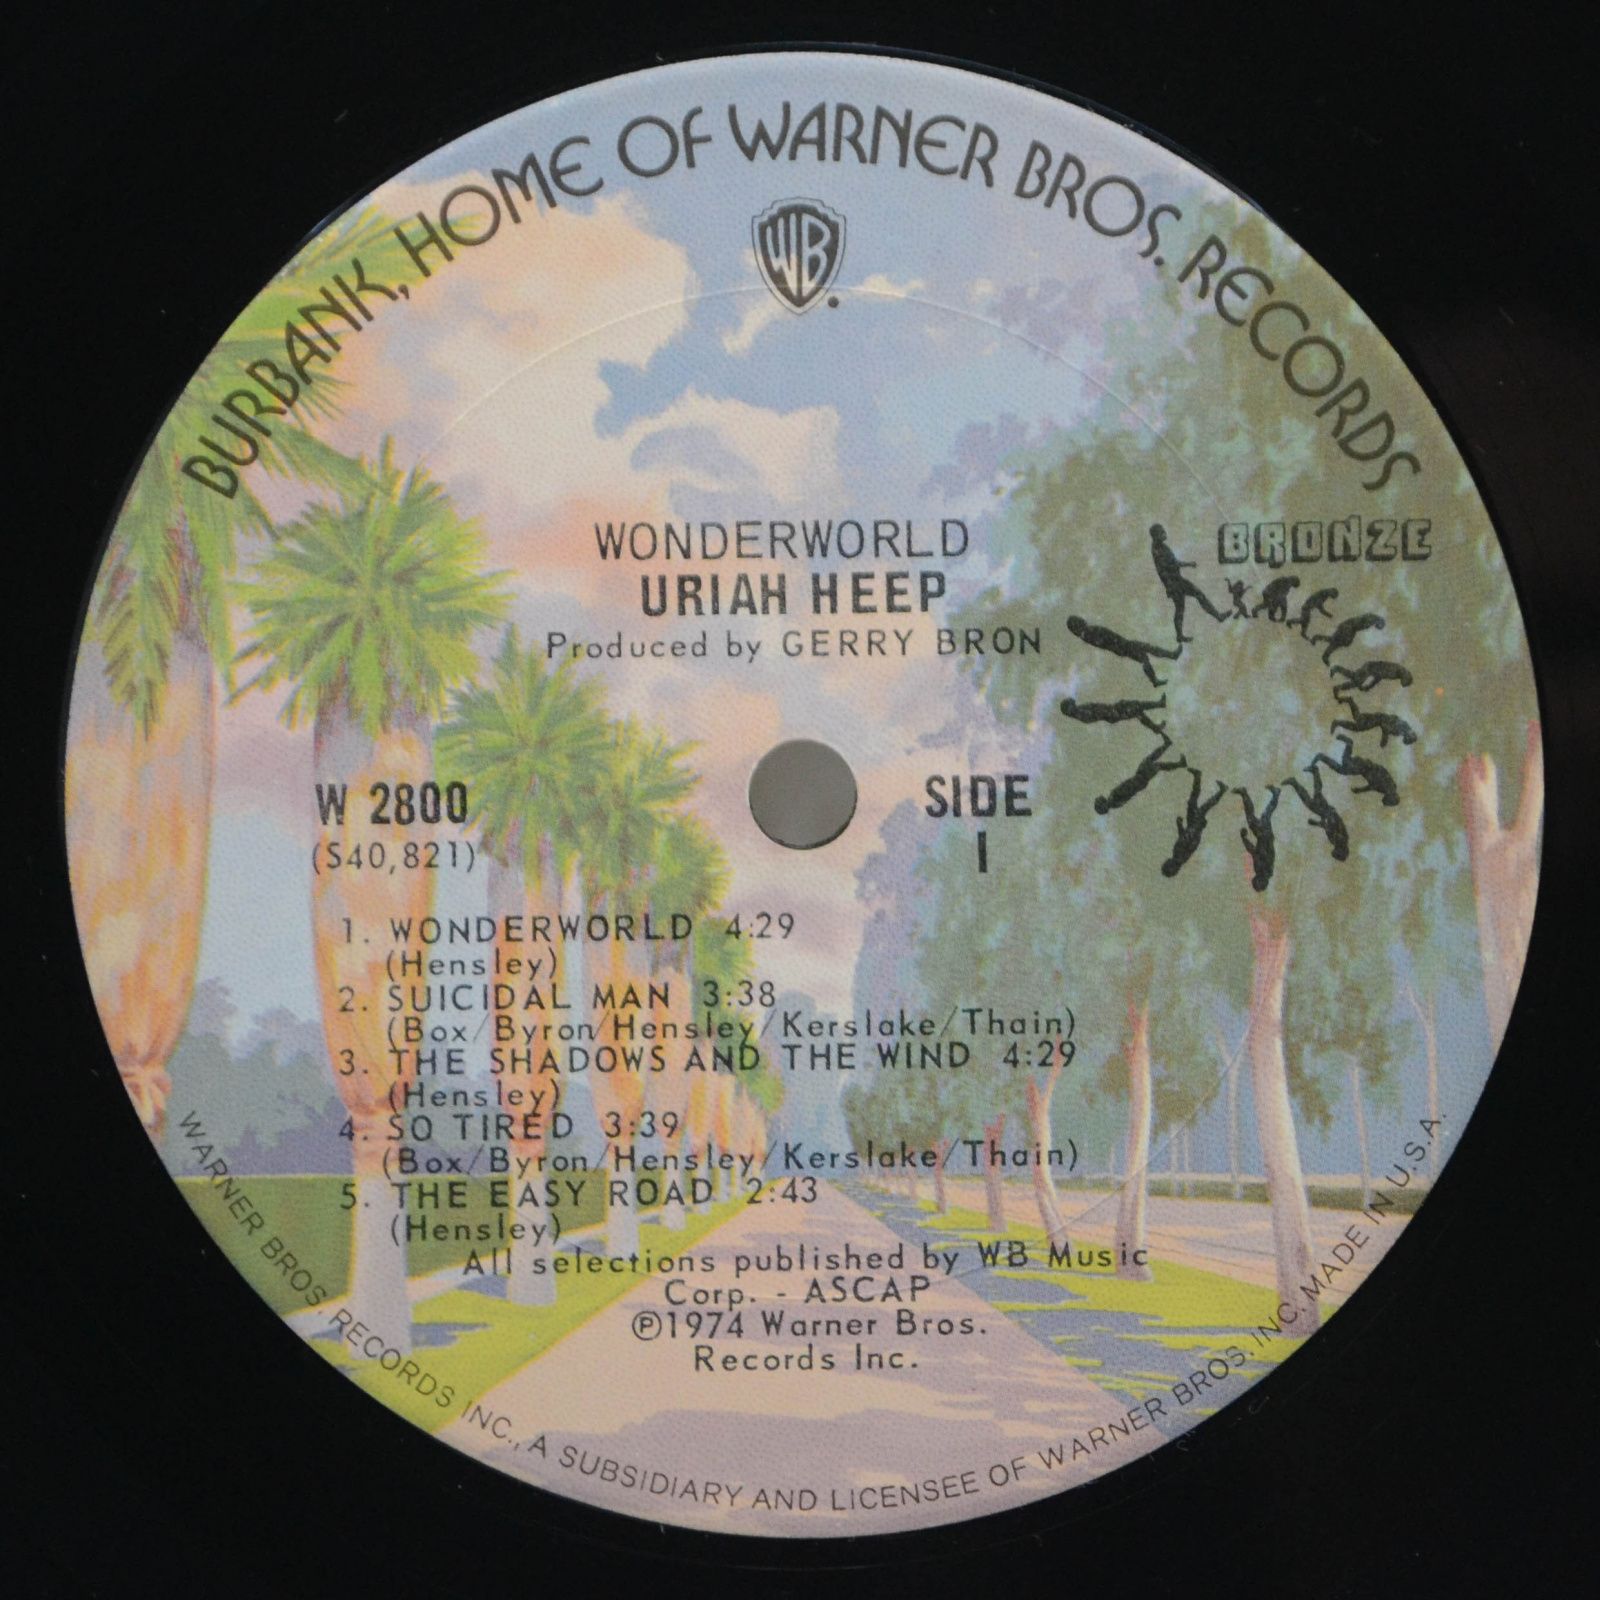 Uriah Heep — Wonderworld (USA), 1974